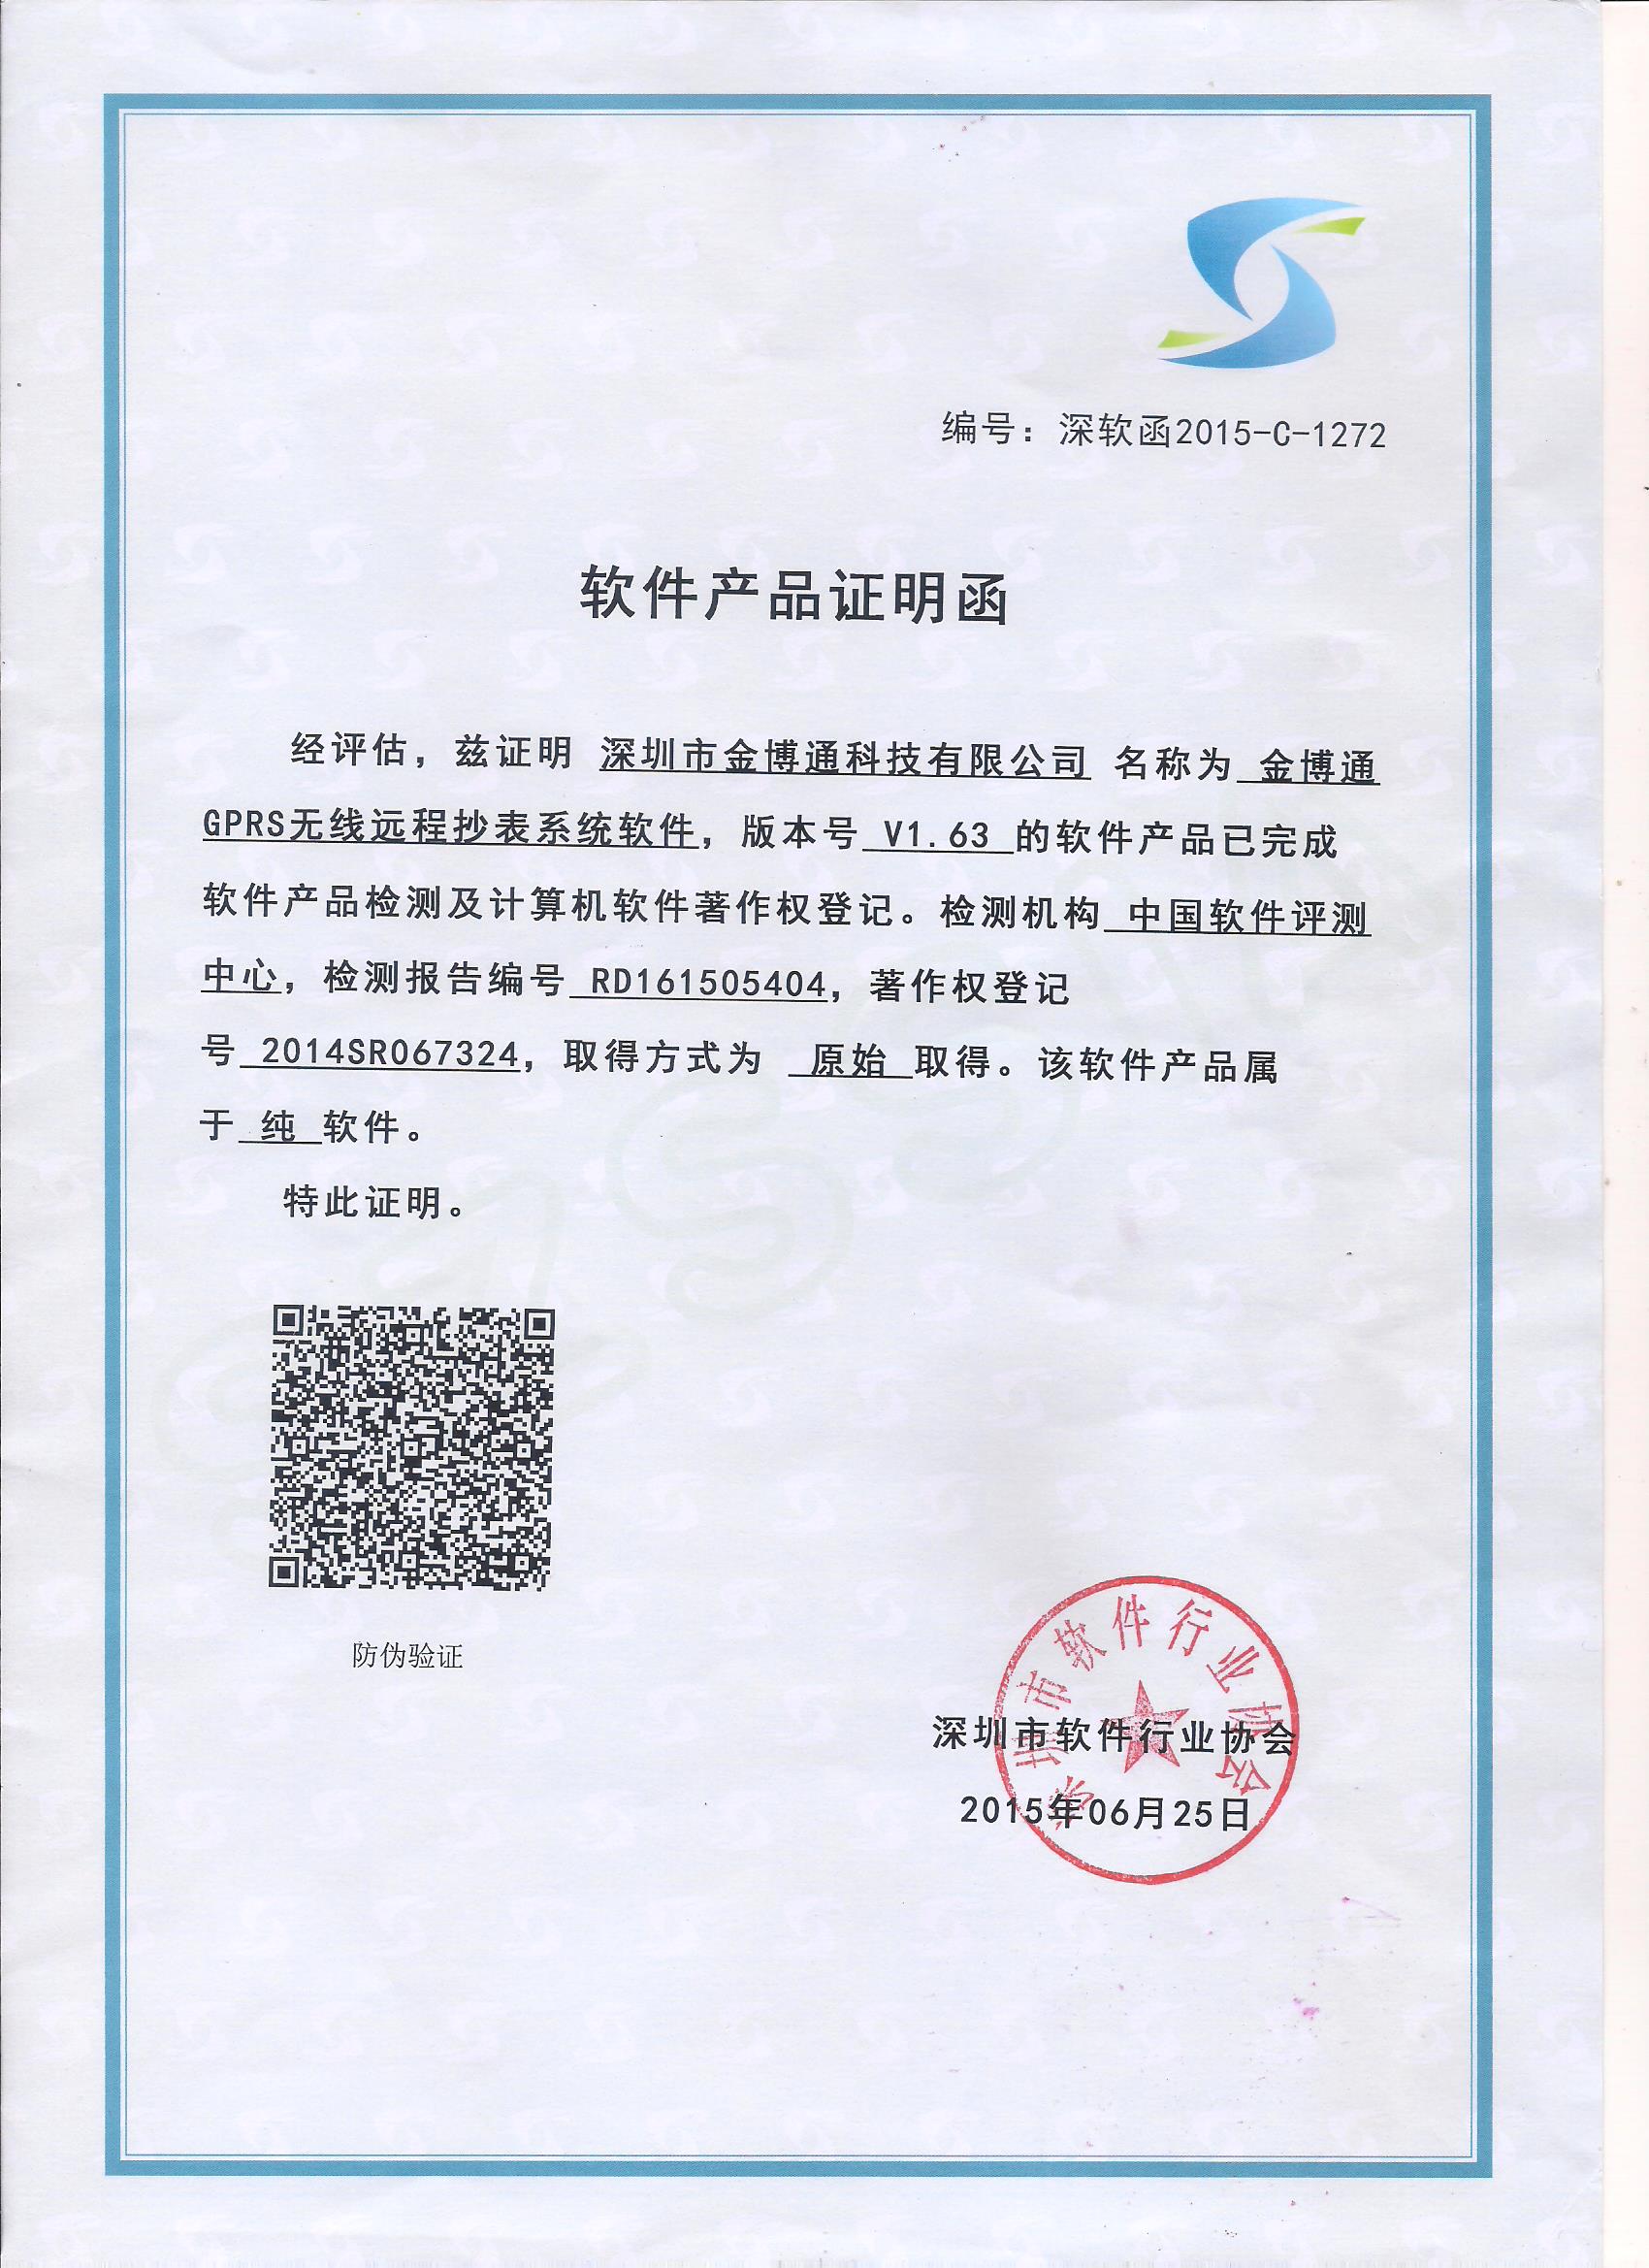 GPRS meter reading software V1.63 certificate